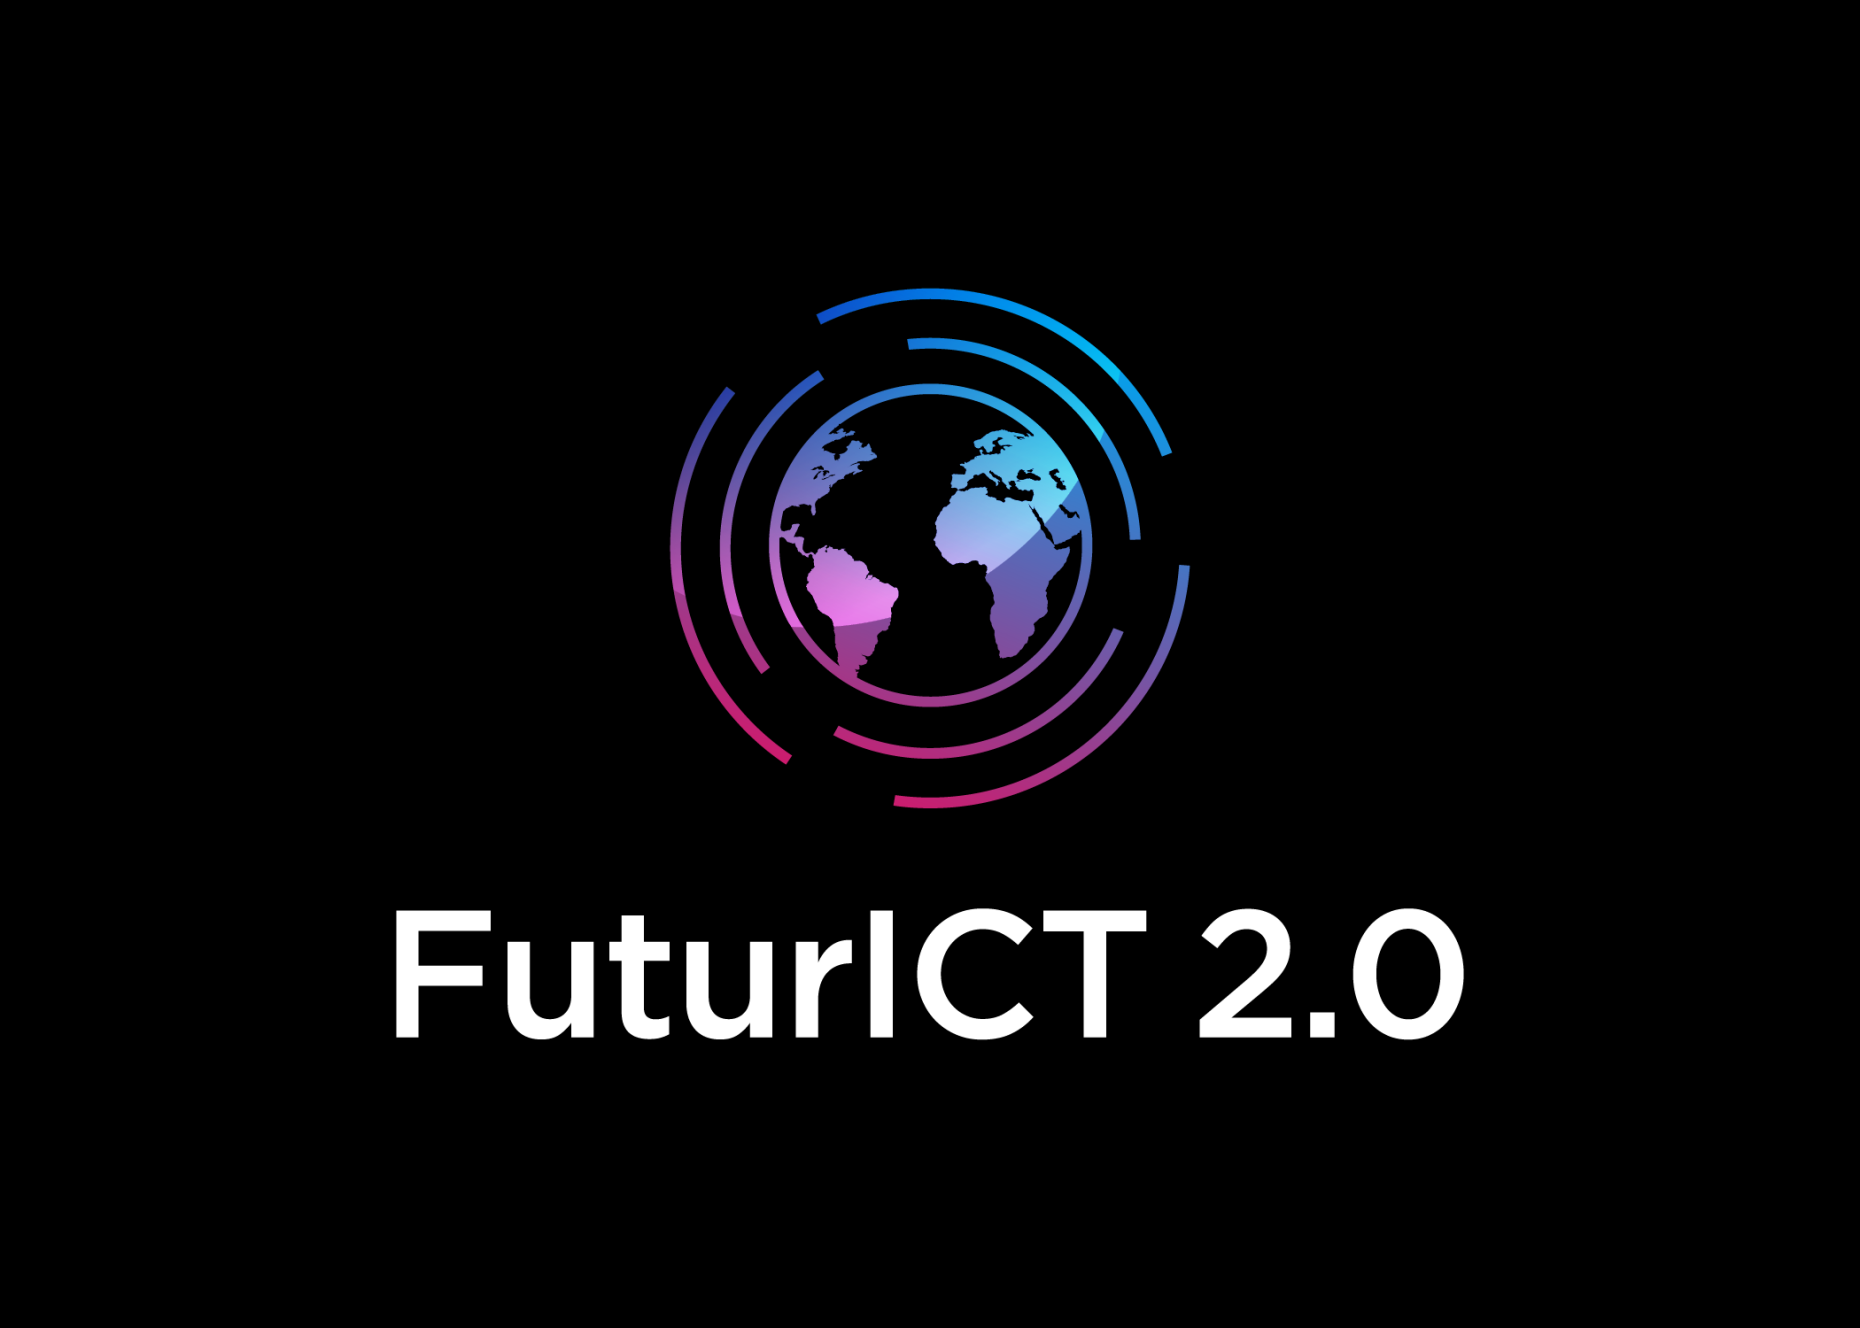 FuturICT 2.0